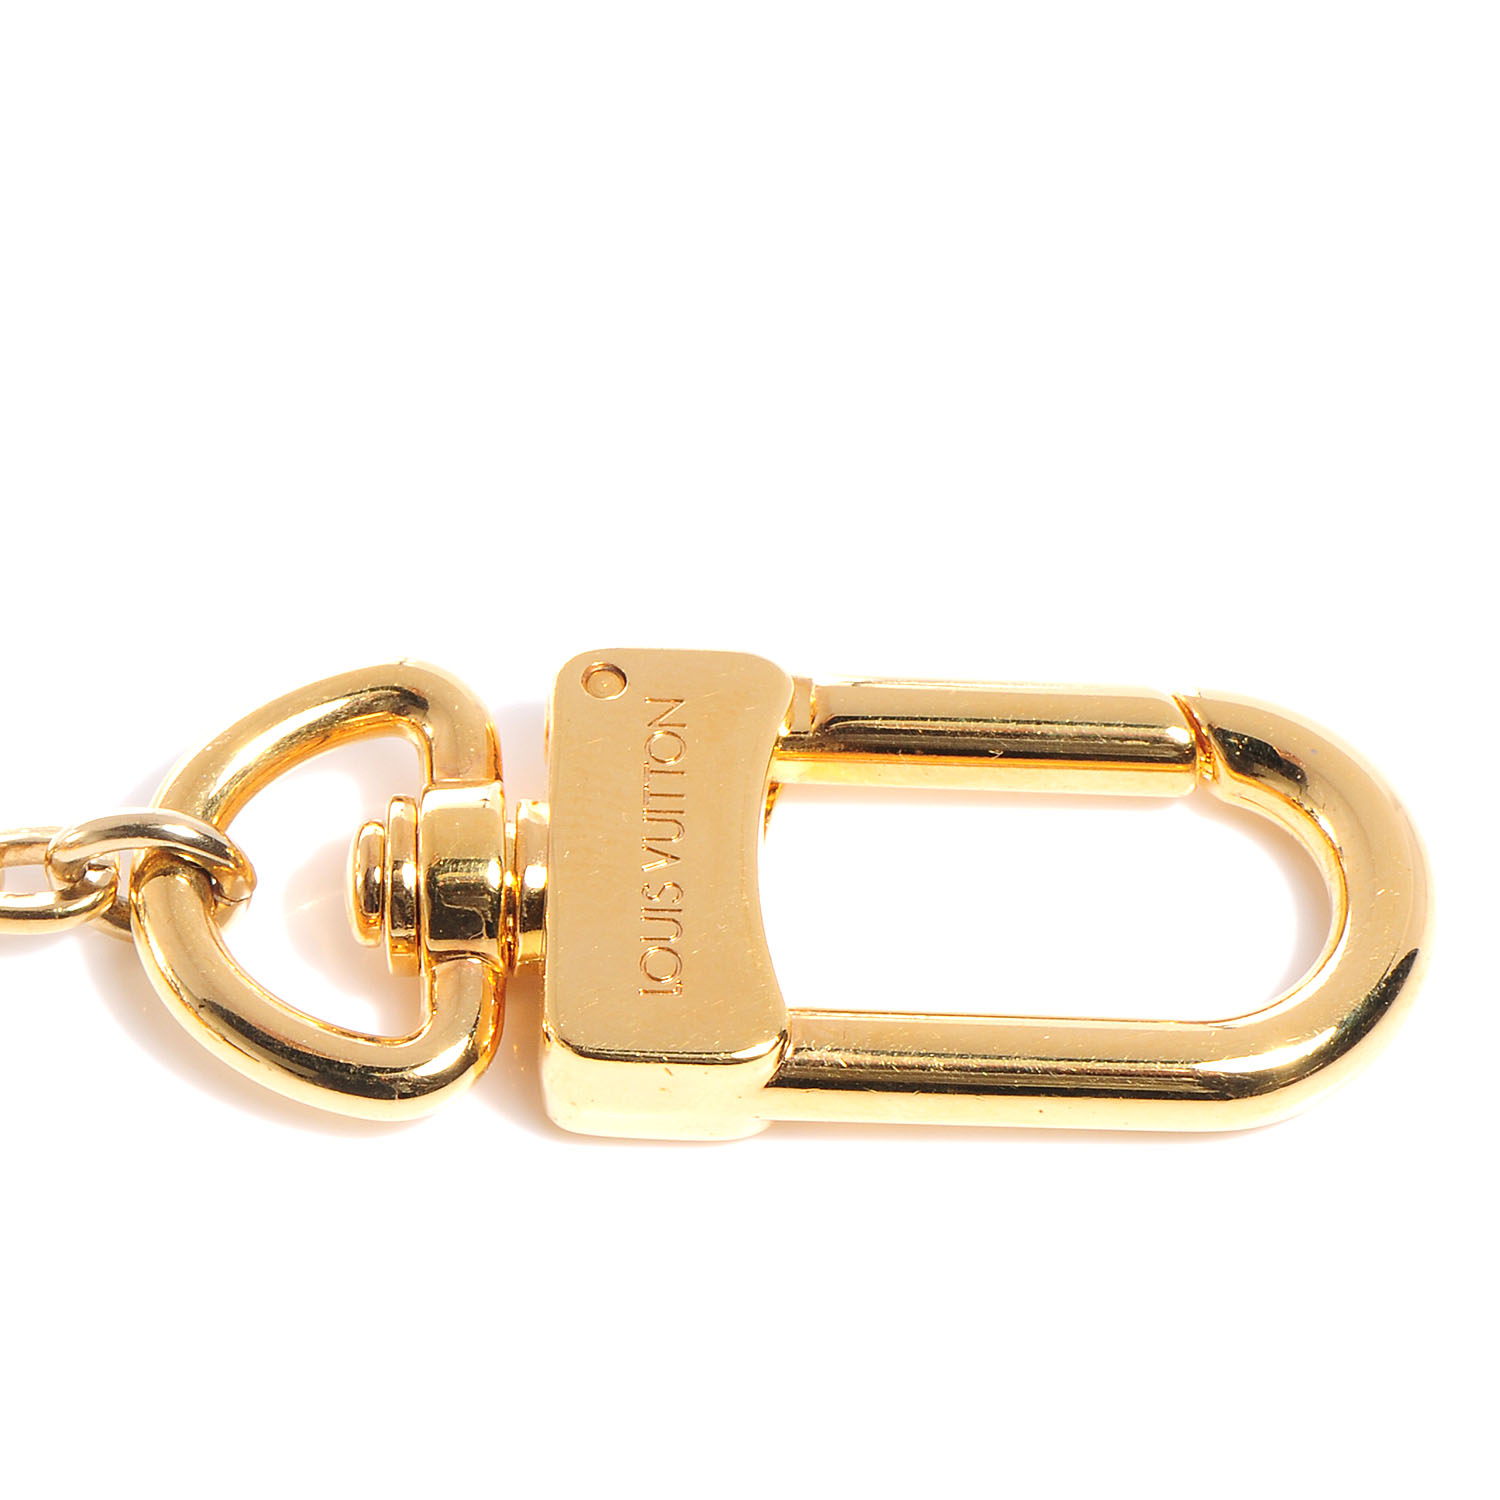 LOUIS VUITTON Enamel Iconic Speedy Bag Charm Chain Gold 81898